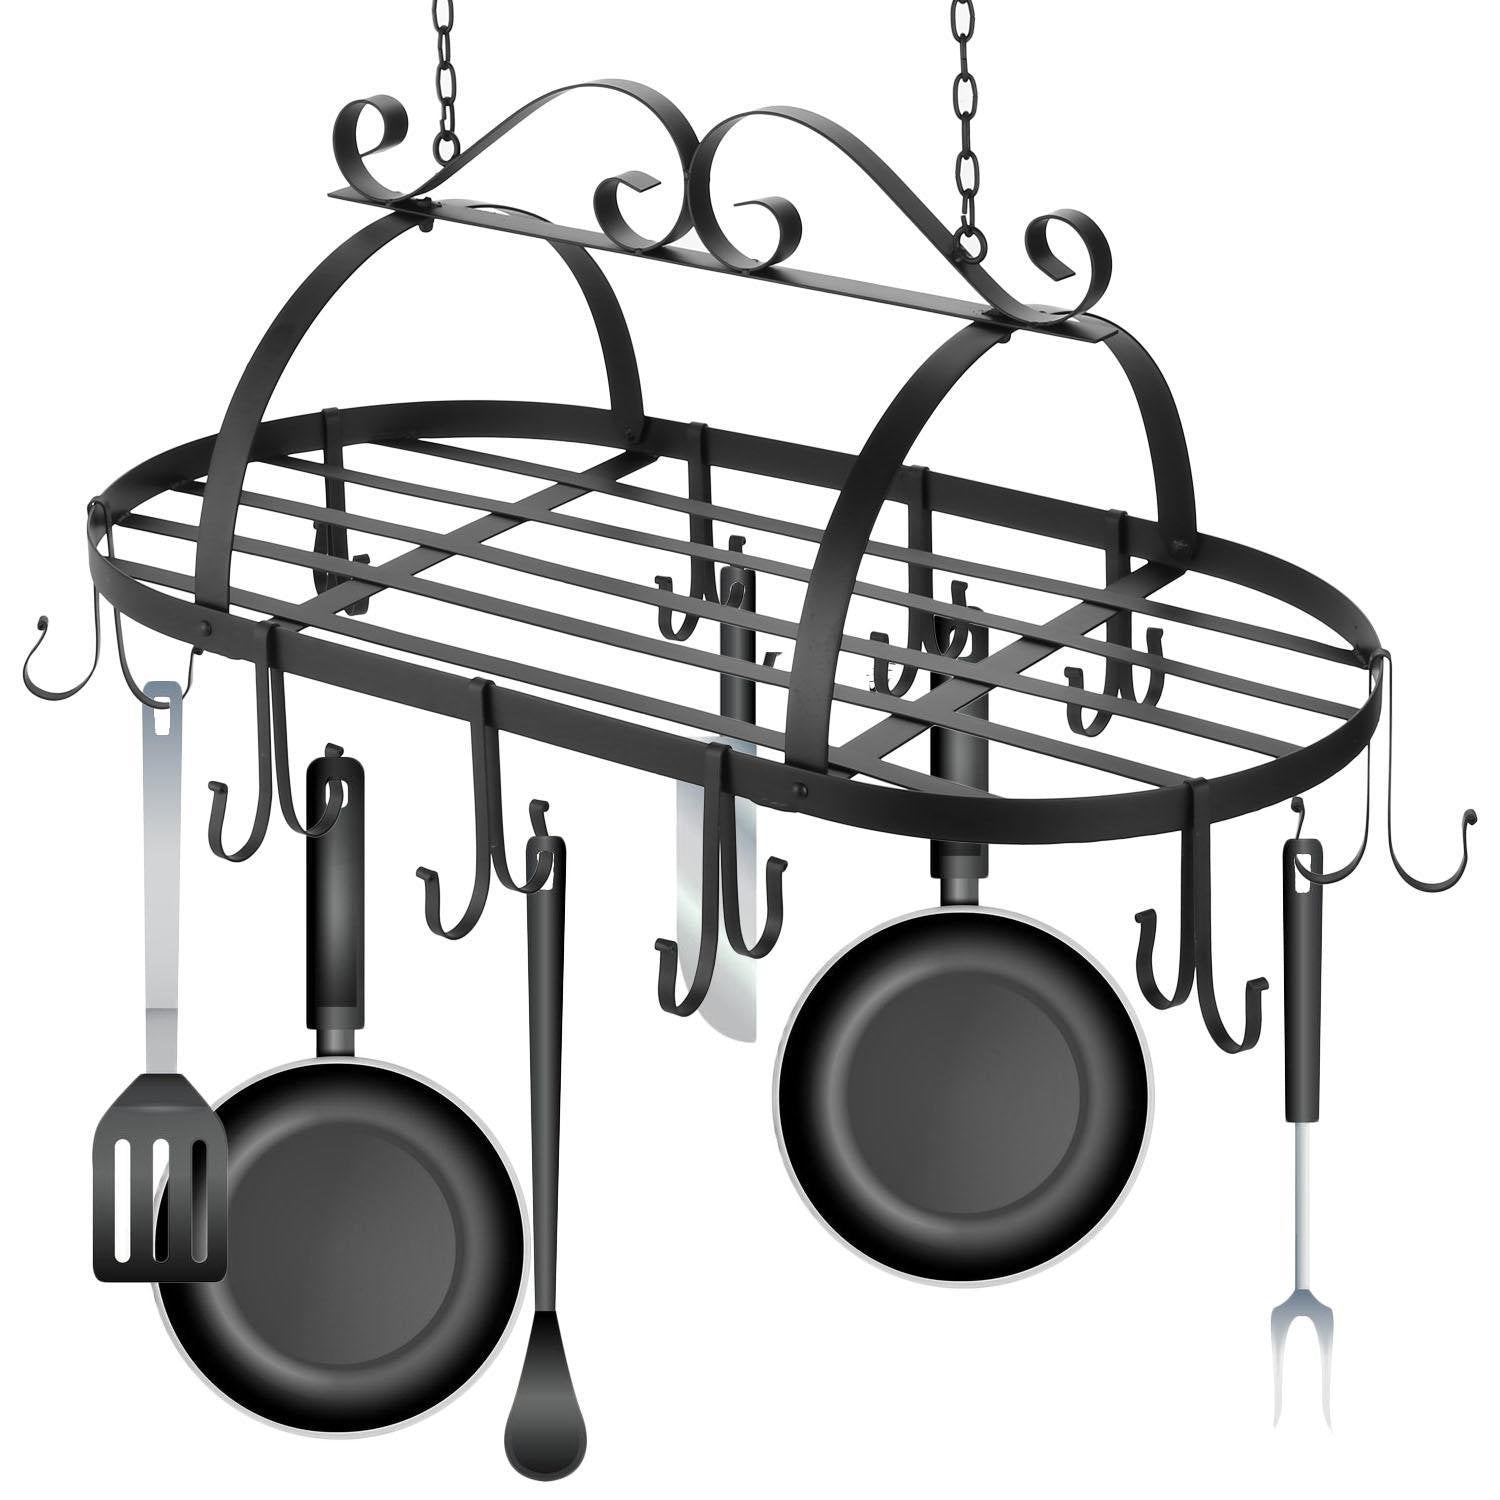 Kitchen Wall Mount Pot Storage Rack Pans Organizer hanger with Hook for Kitchen Cookware, Utensils, Pans, Books